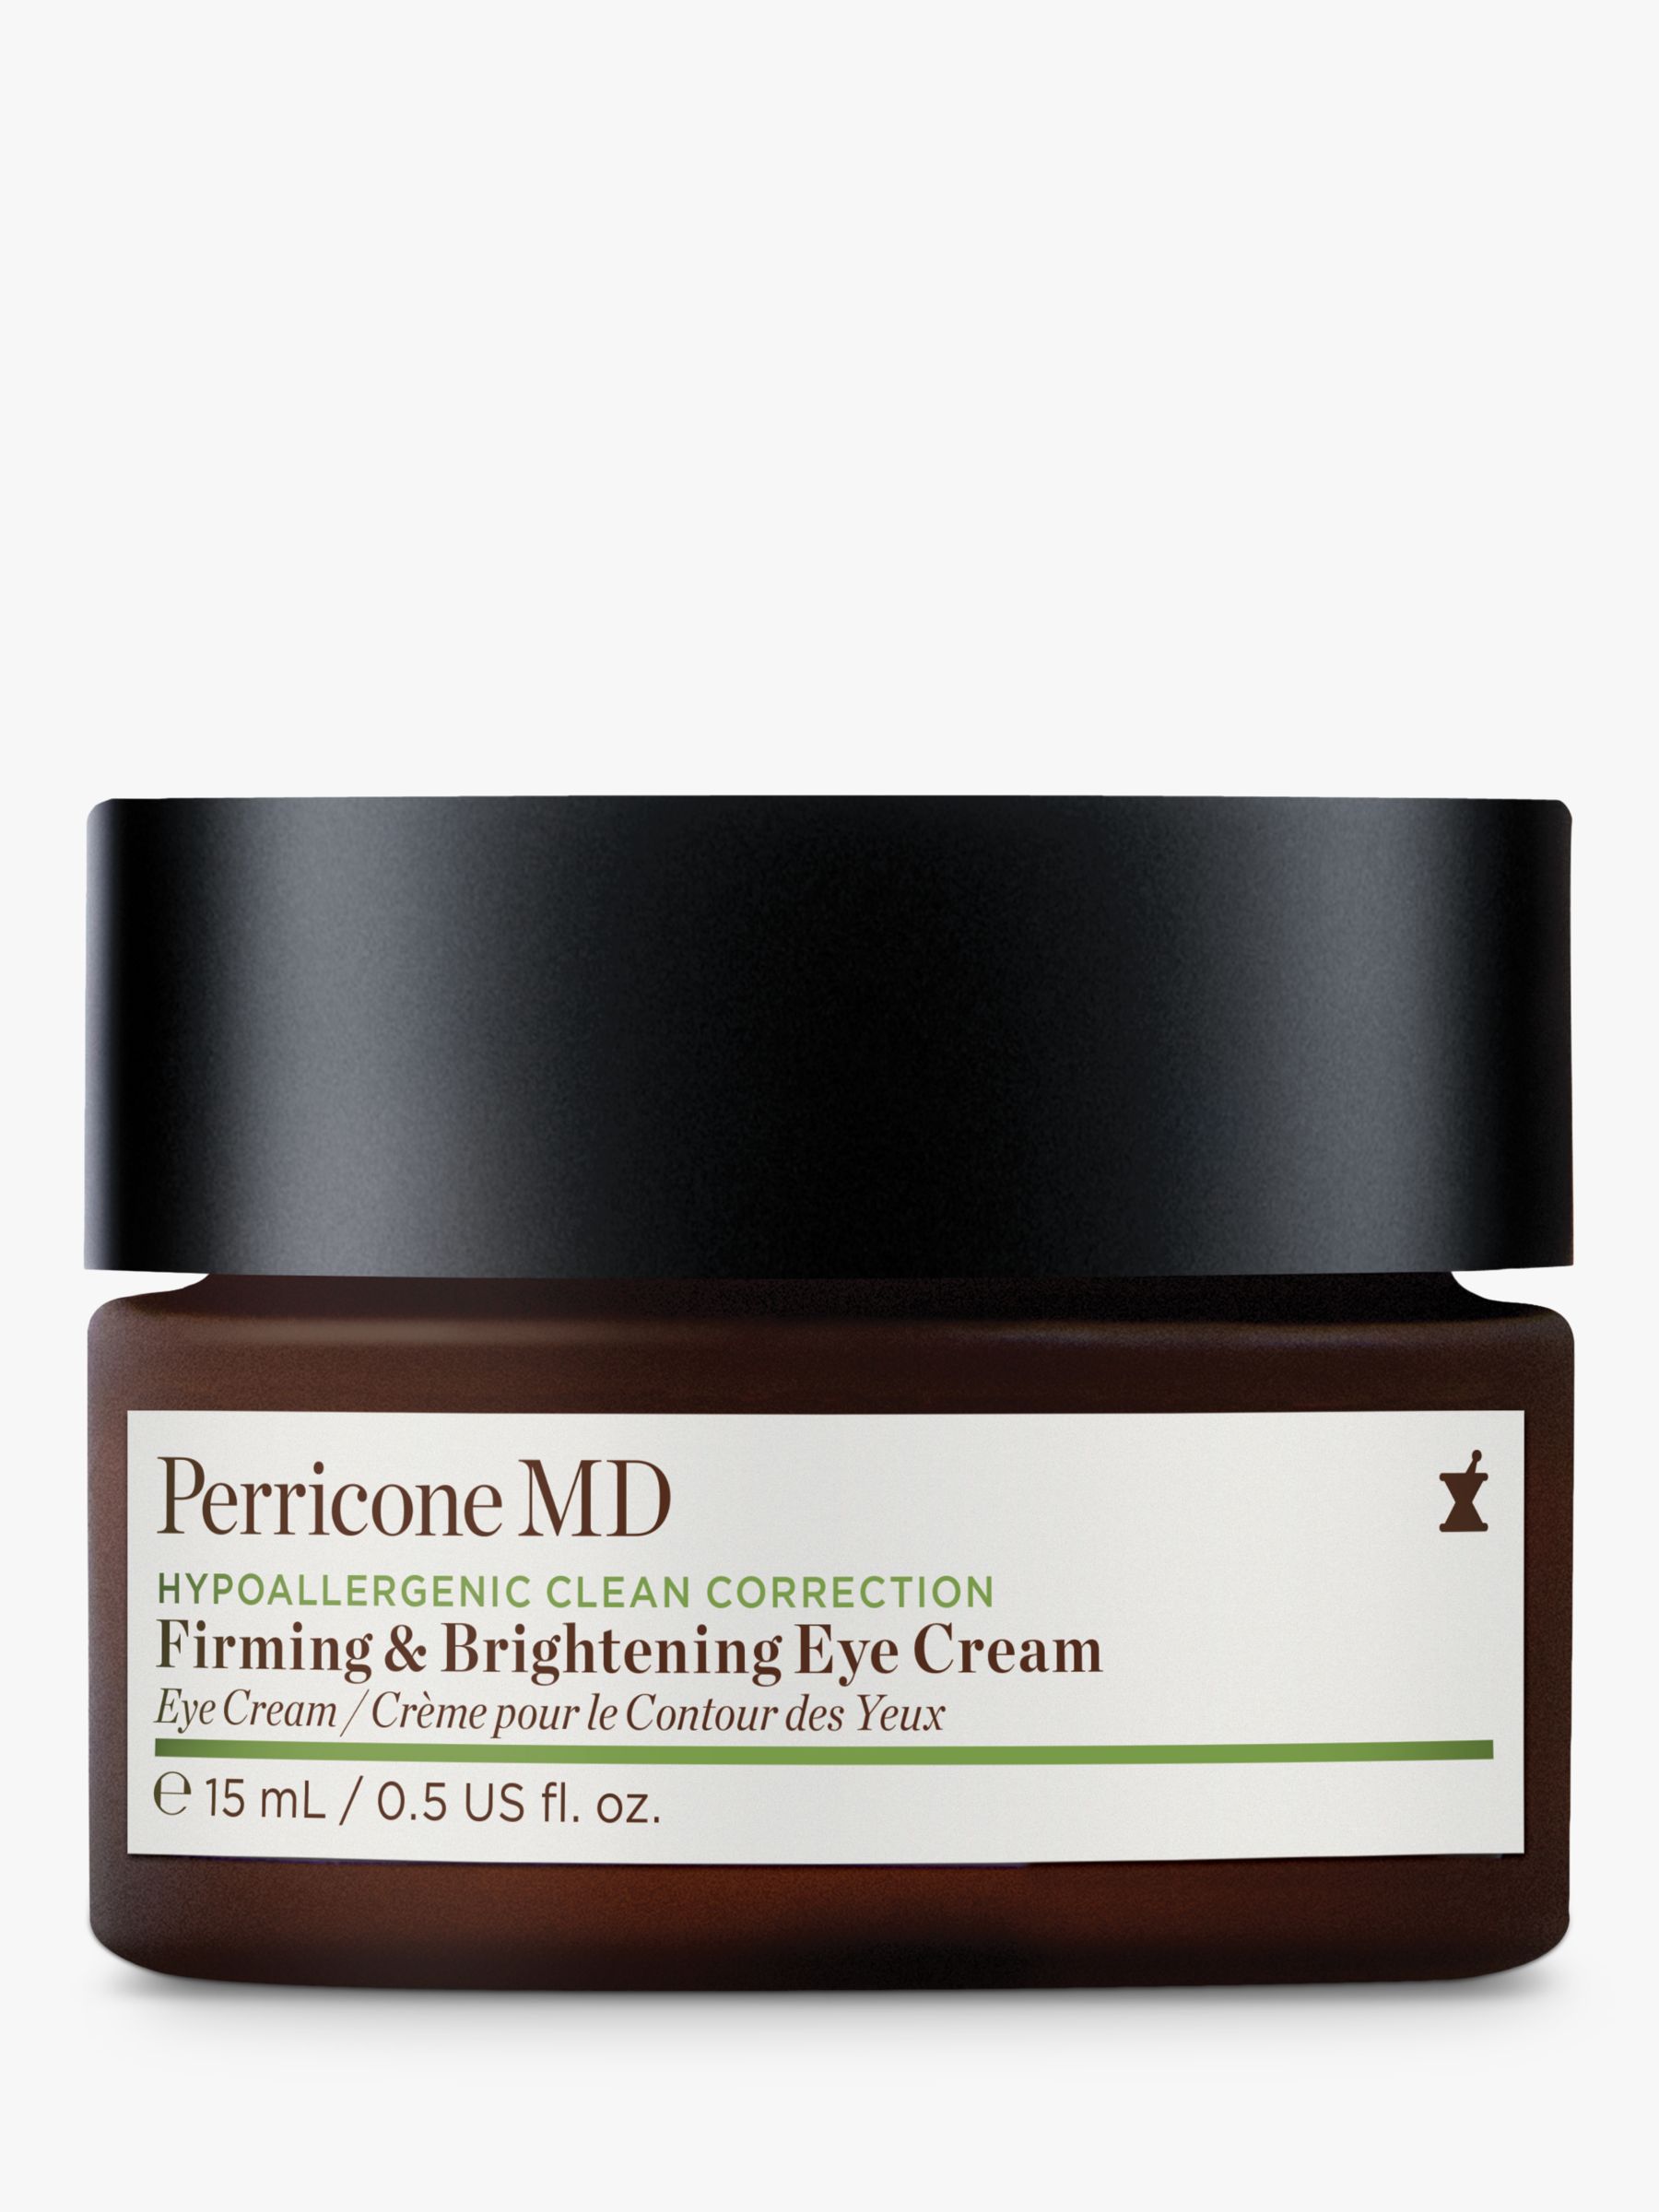 Perricone MD Hypoallergenic Clean Correction Firming & Brightening Eye Cream, 15ml 2